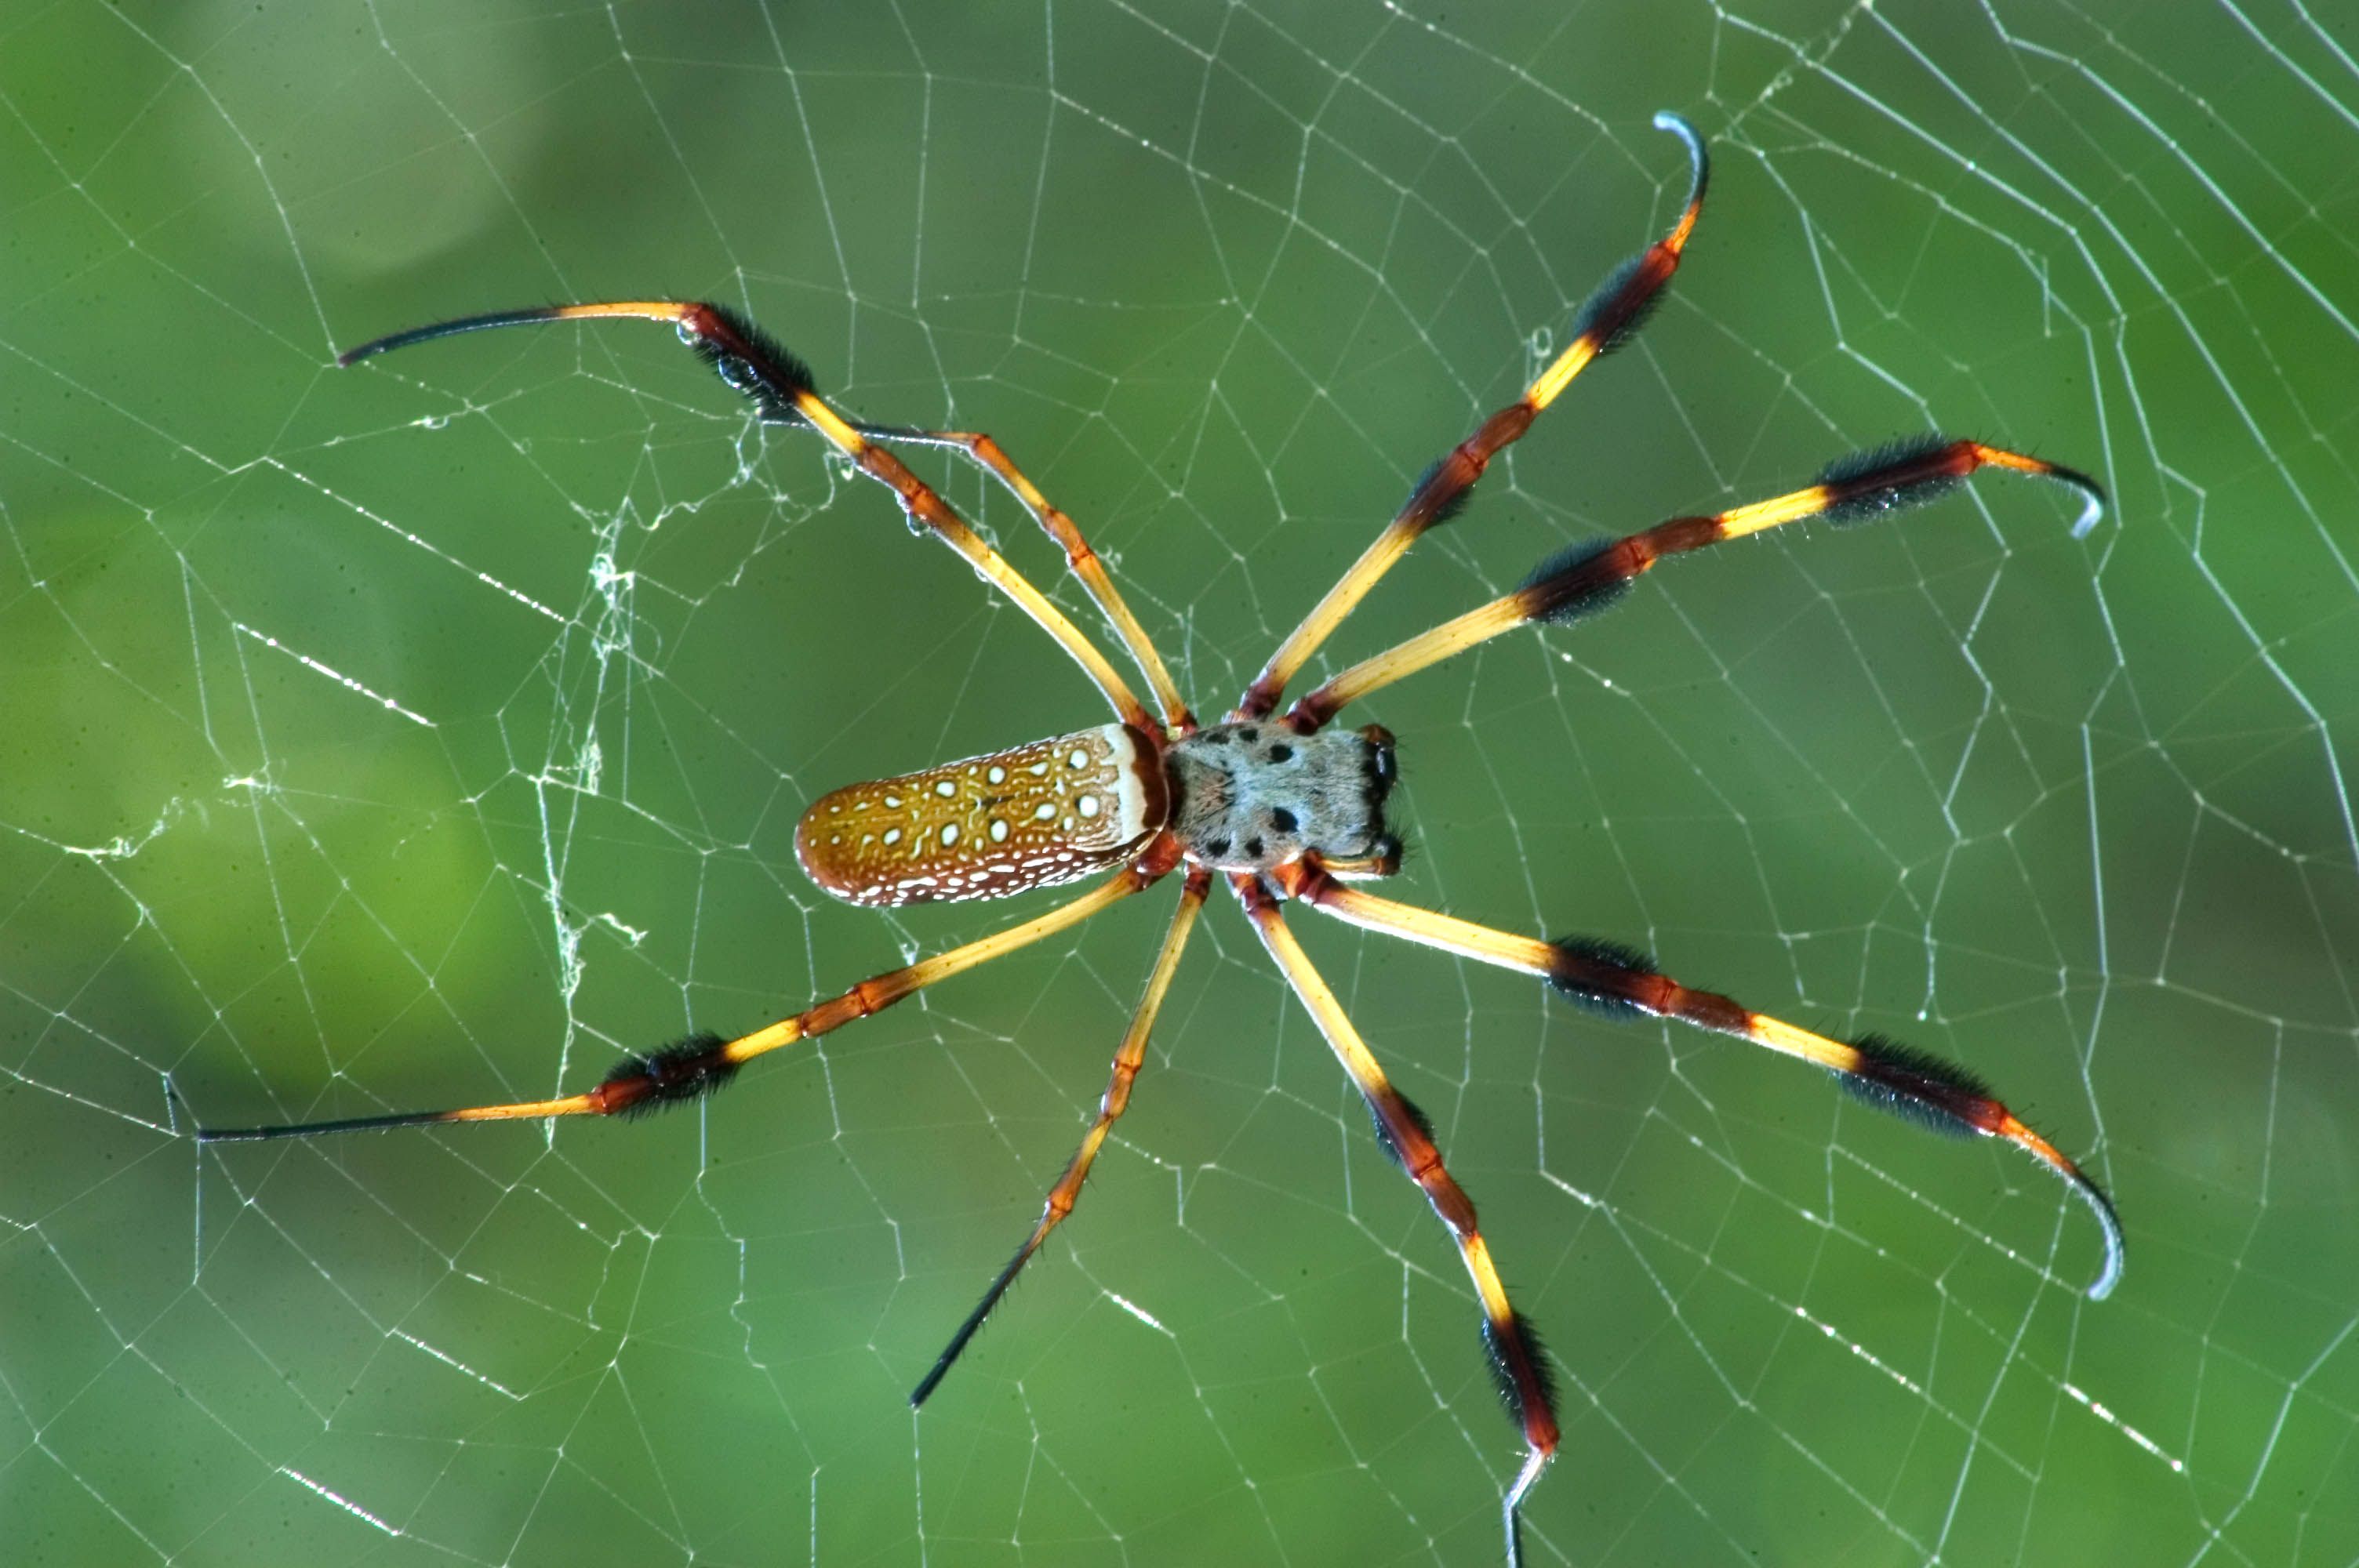 Pin by Doris Ann Schrock on Harmfull Creatures | Pinterest | Spider ...